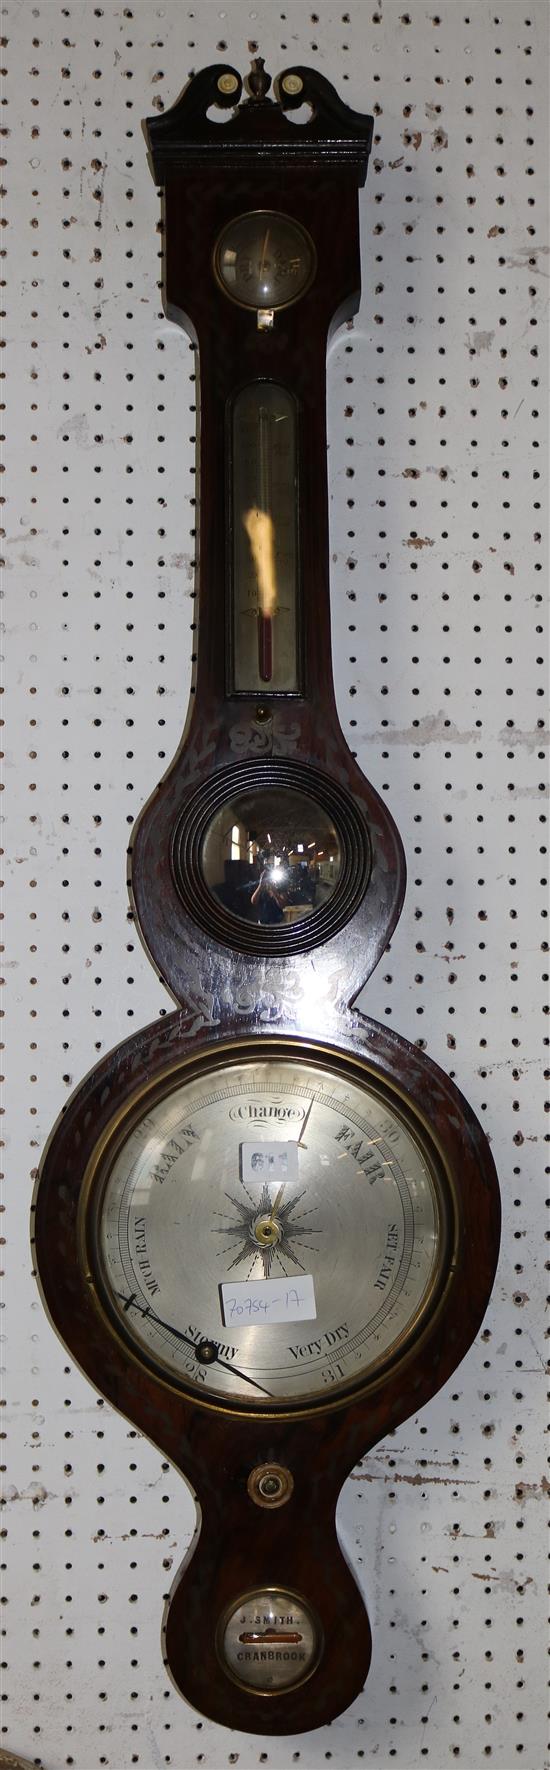 A Smith Wheel barometer